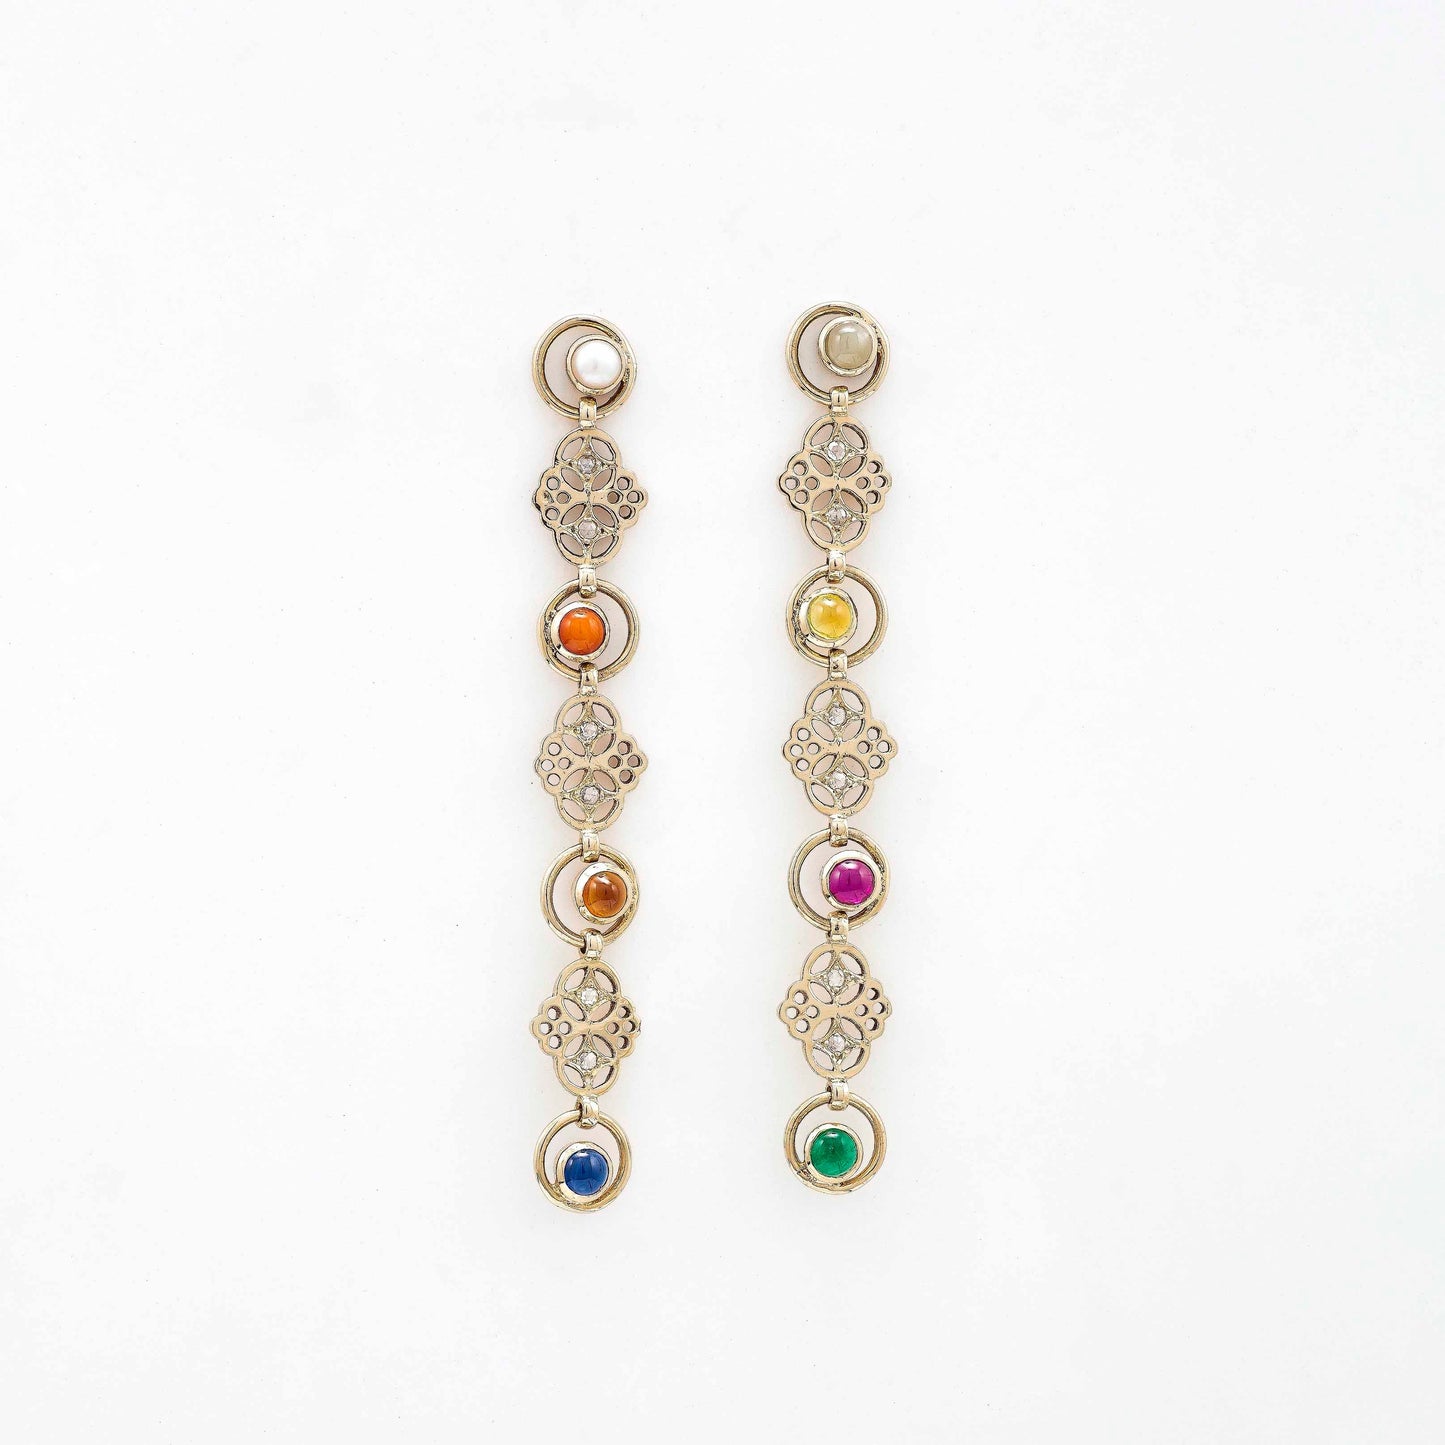 The Janani Navratna Series Gold, Diamond and Navratna Long Earrings by Rasvihar